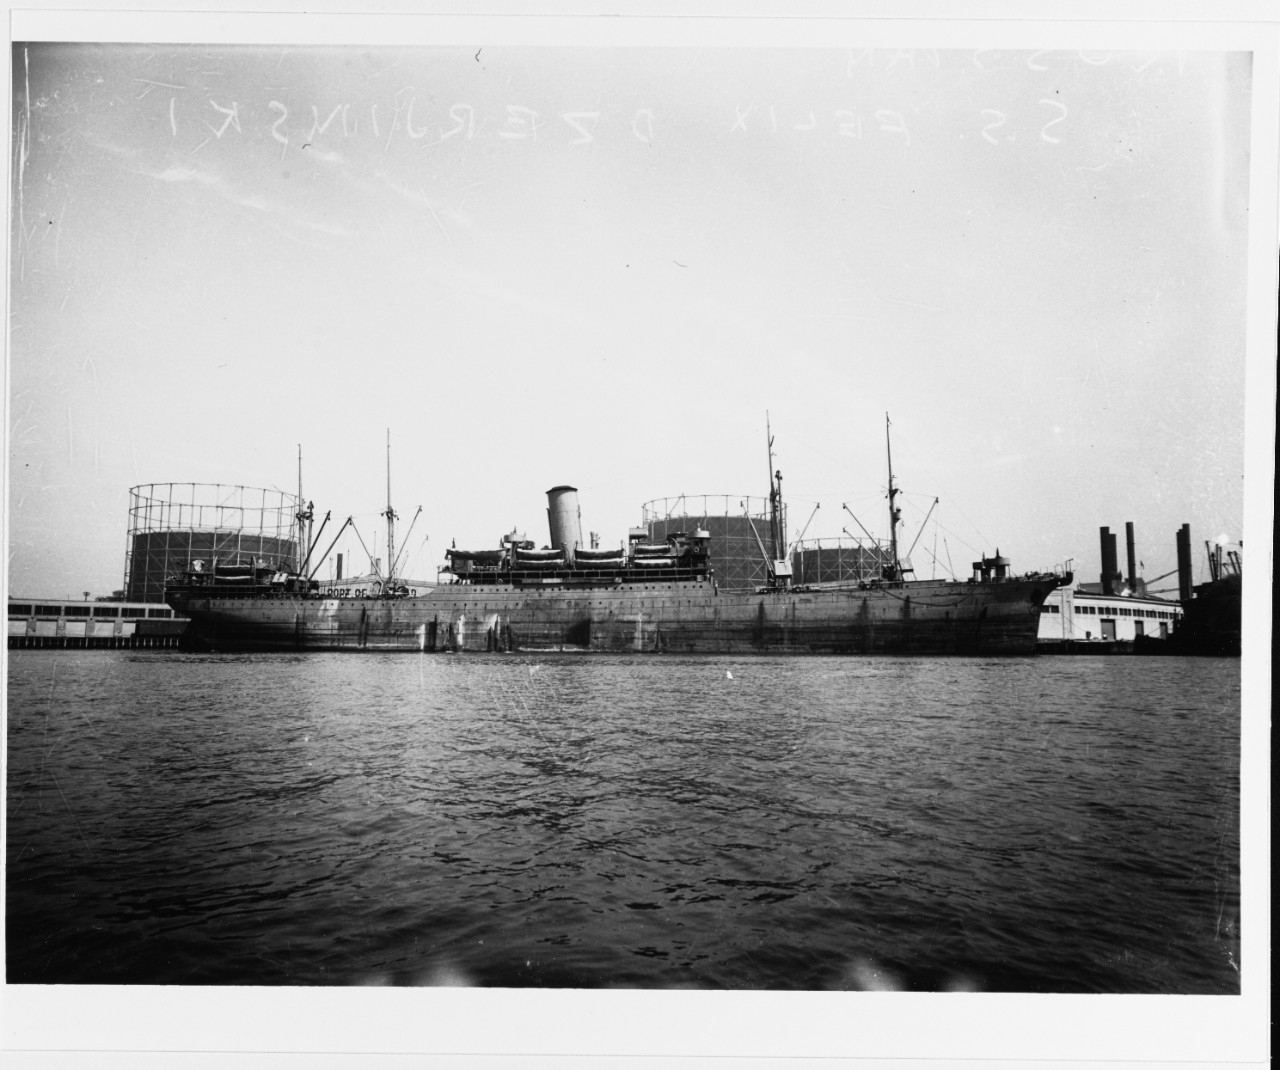 S.S. FELIKS DZERZHINSKY (U.S.S. R. Merchant passenger ship) 1926-1955.